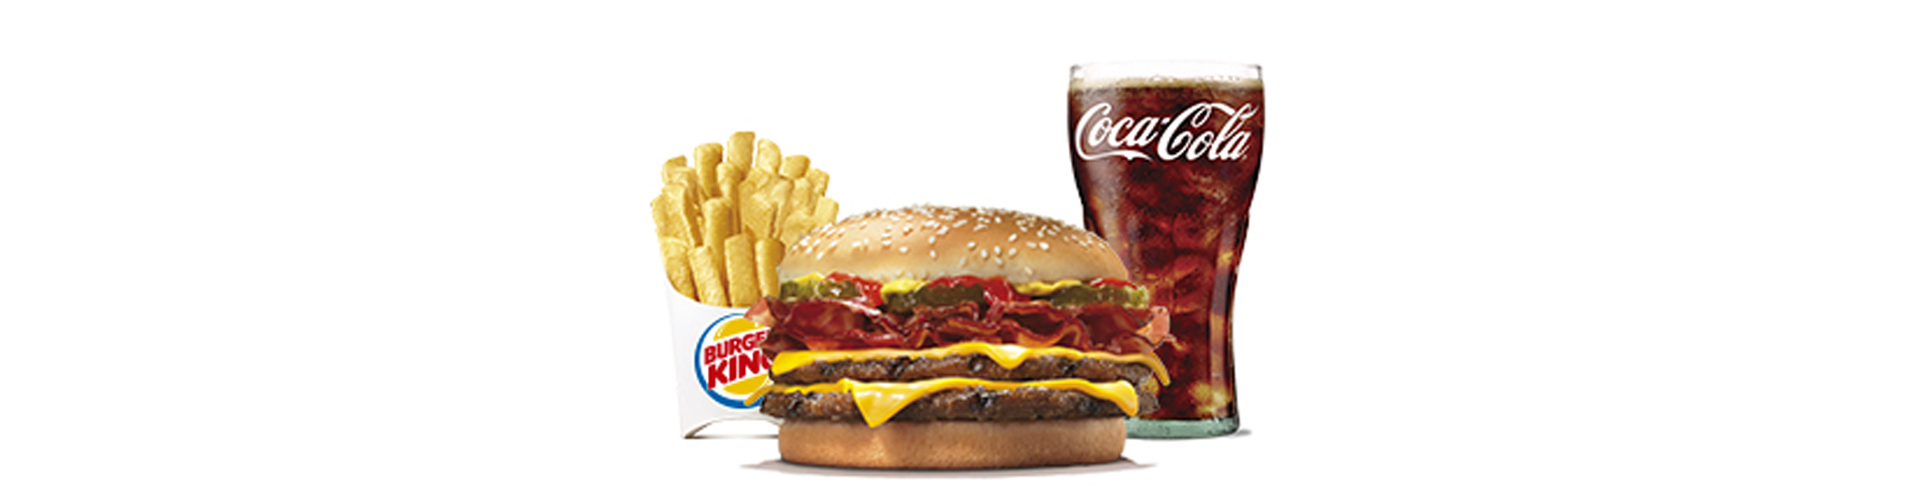 menu-doble-cheese-bacon-burgerking-40001718